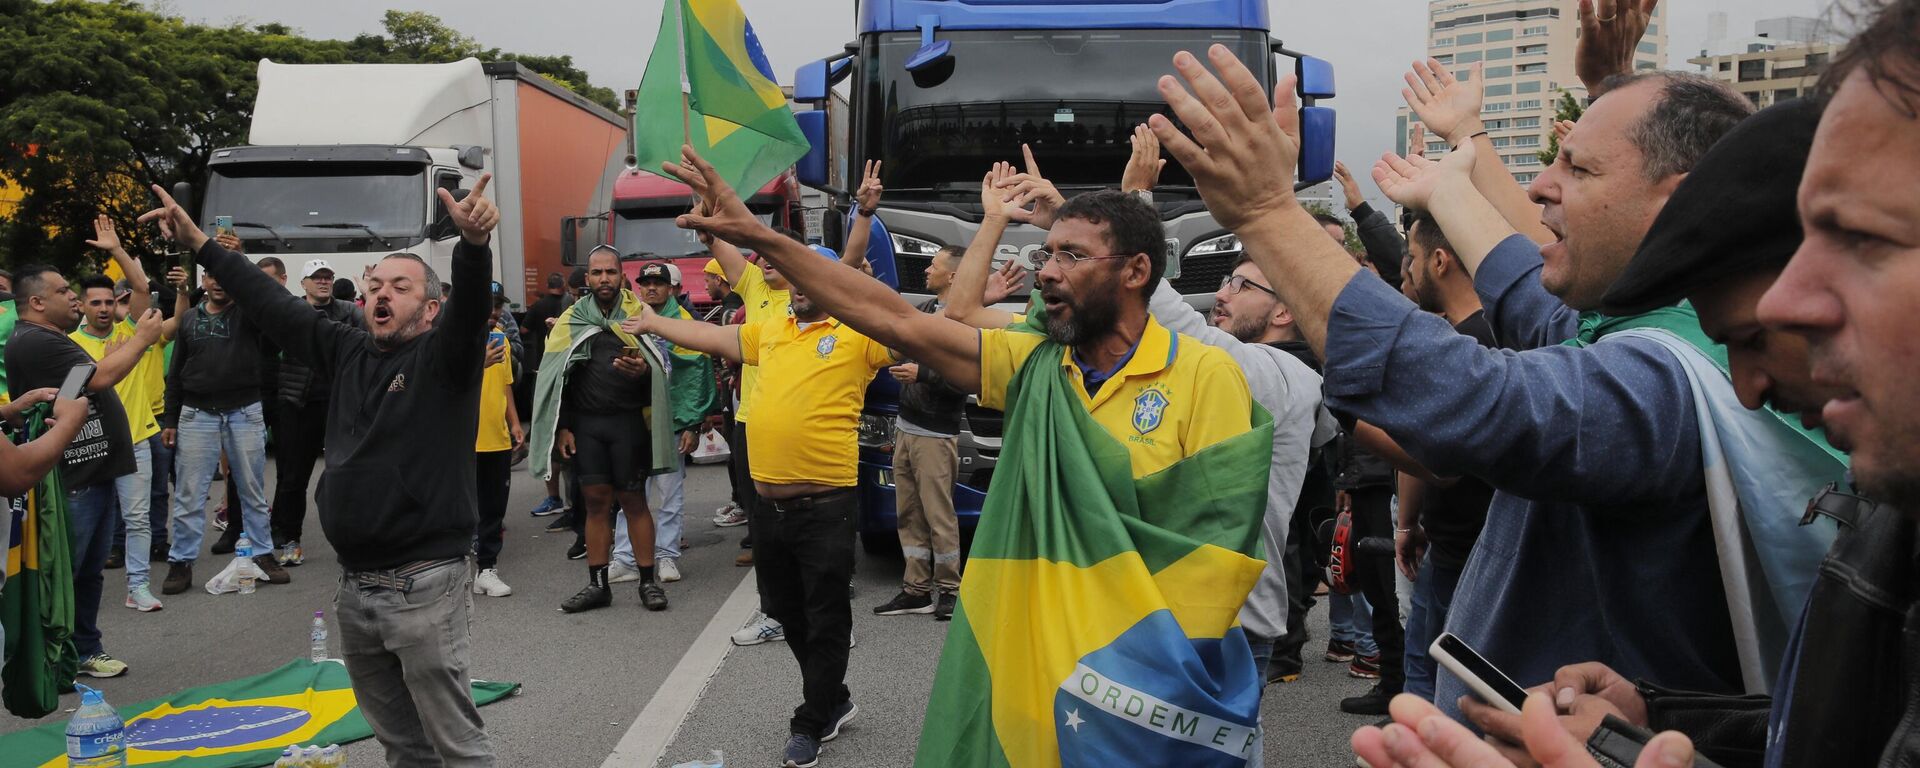 Supporters of President Jair Bolsonaro demonstrate during a blockade on Castelo Branco highway, on the outskirts of Sao Paulo, Brazil, on November 1, 2022. (Photo by CAIO GUATELLI / AFP) - Sputnik International, 1920, 12.01.2023